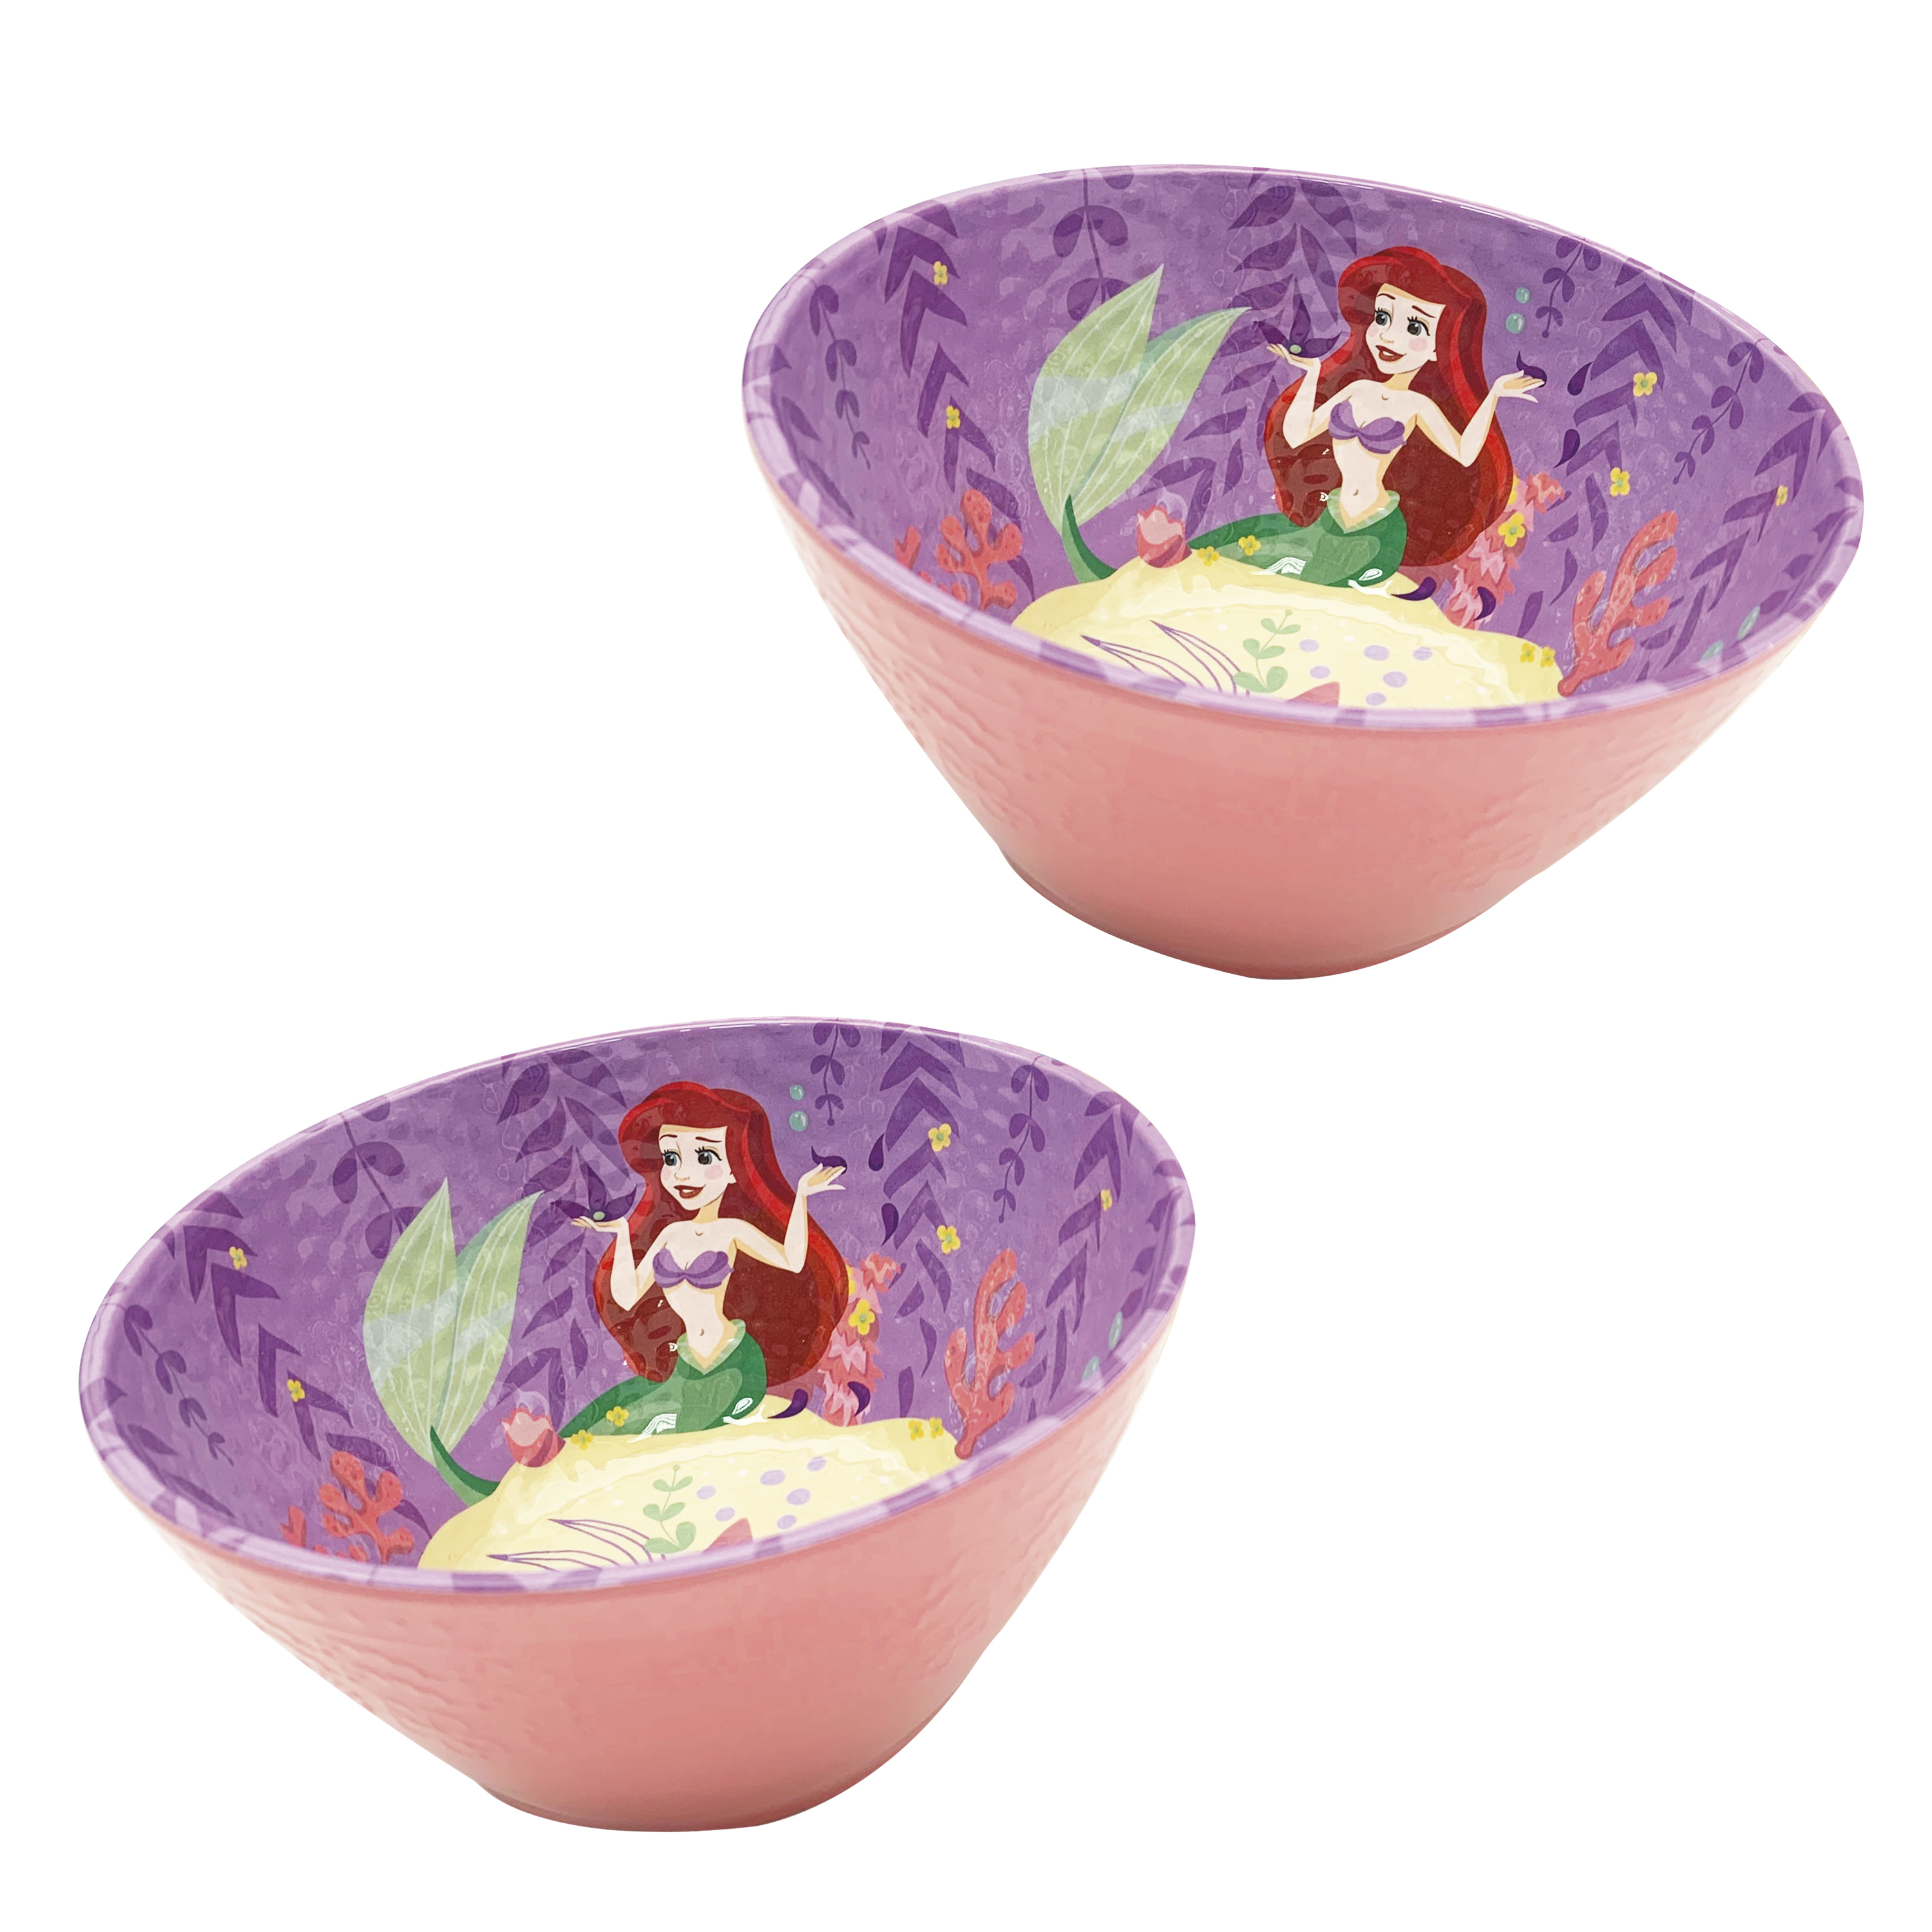 Disney Kids 9-inch Plate and 6-inch Bowl Set, Princess Belle, 2-piece set slideshow image 4